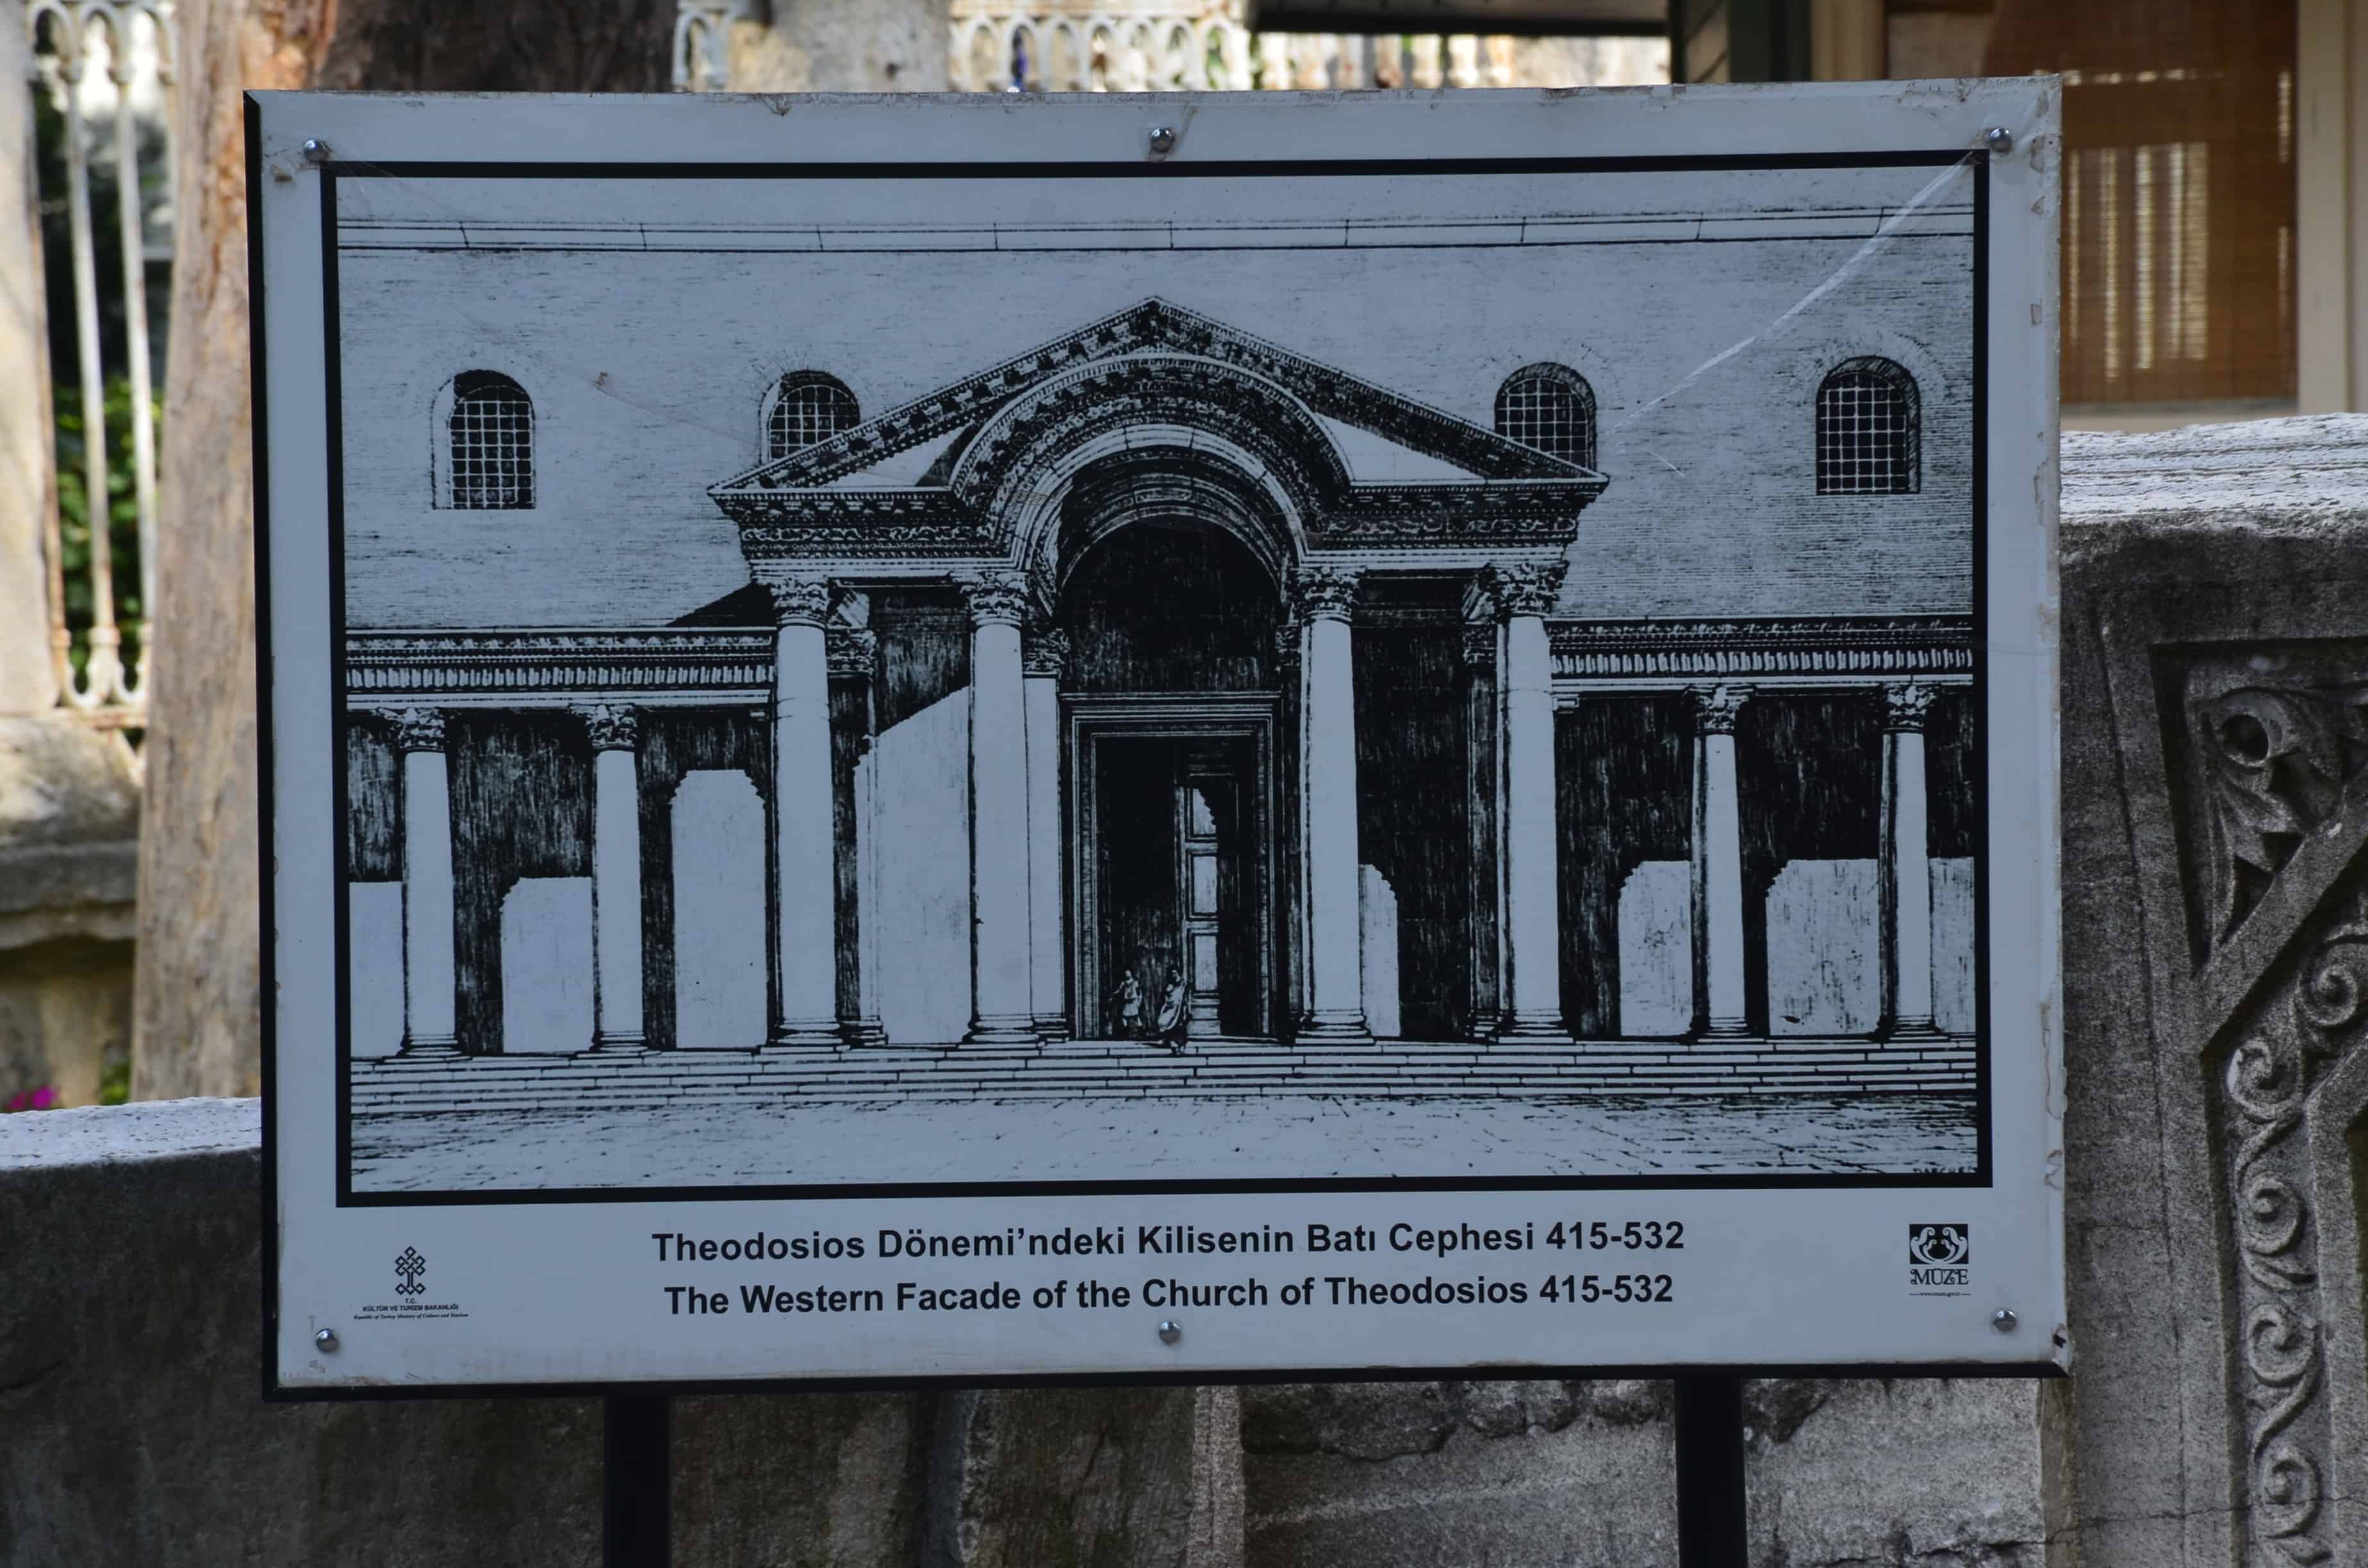 Rendering of the older church at Hagia Sophia in Istanbul, Turkey